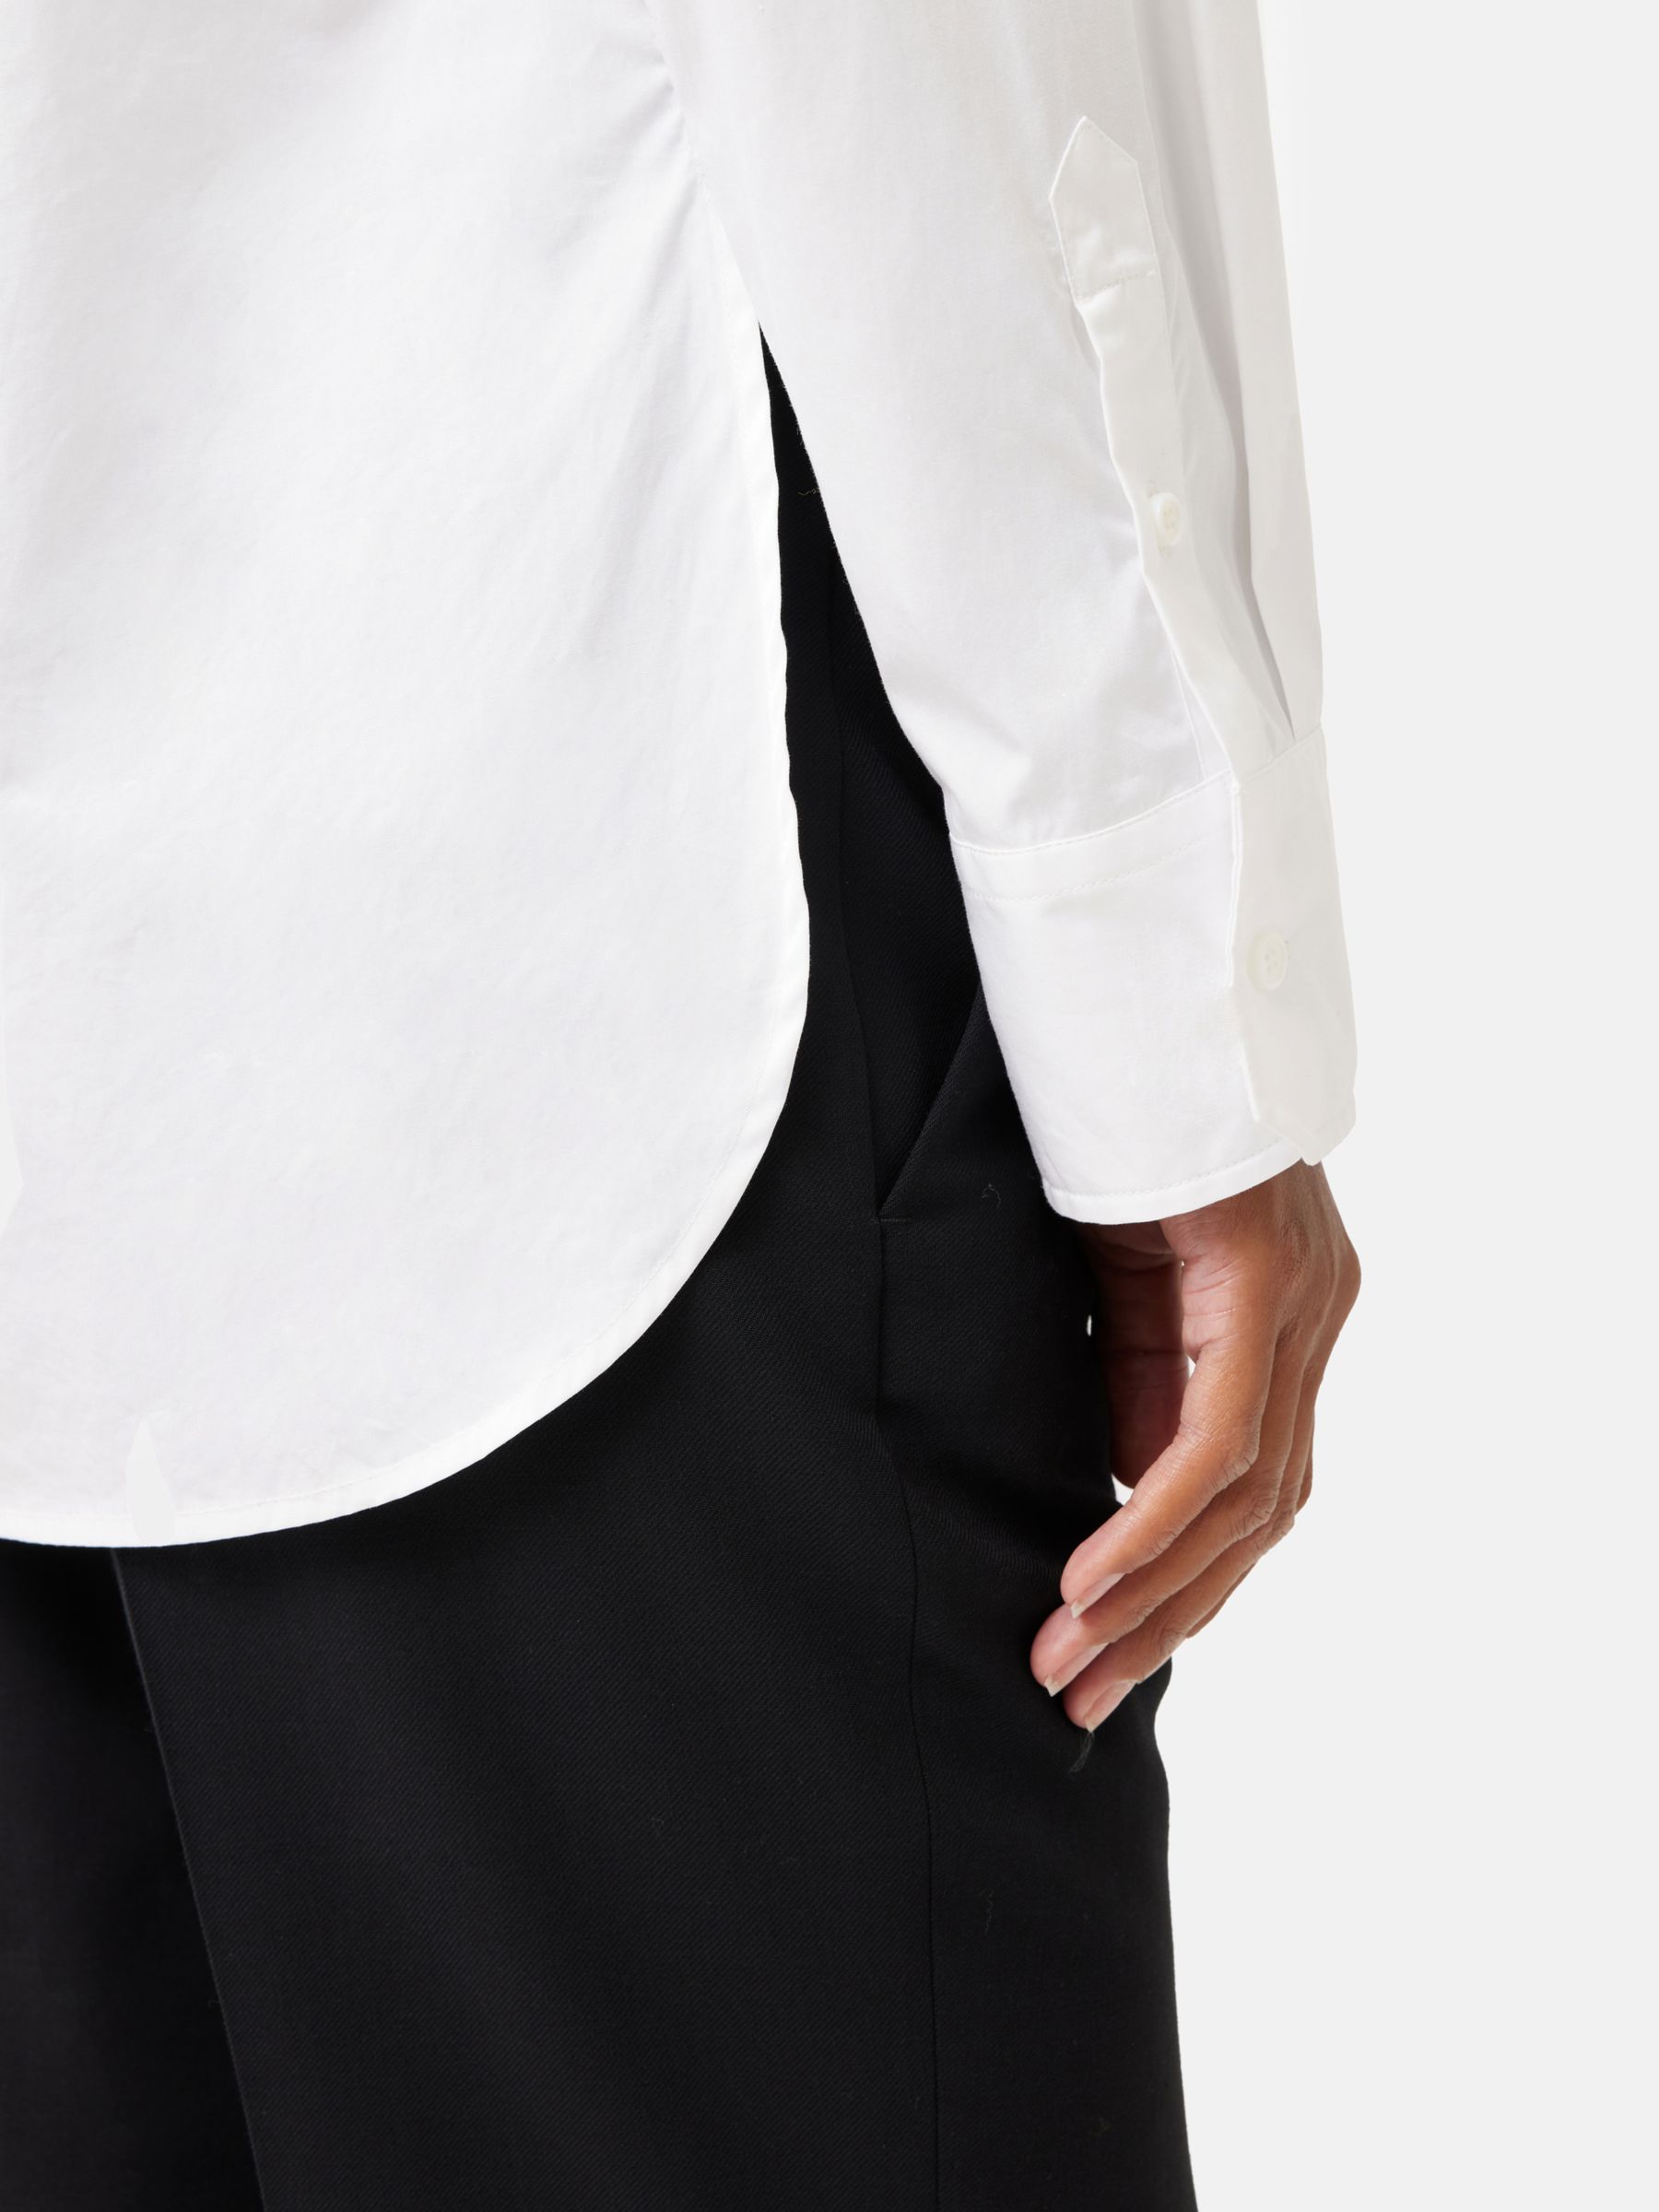 Jigsaw Cotton Poplin Shirt, White at John Lewis & Partners